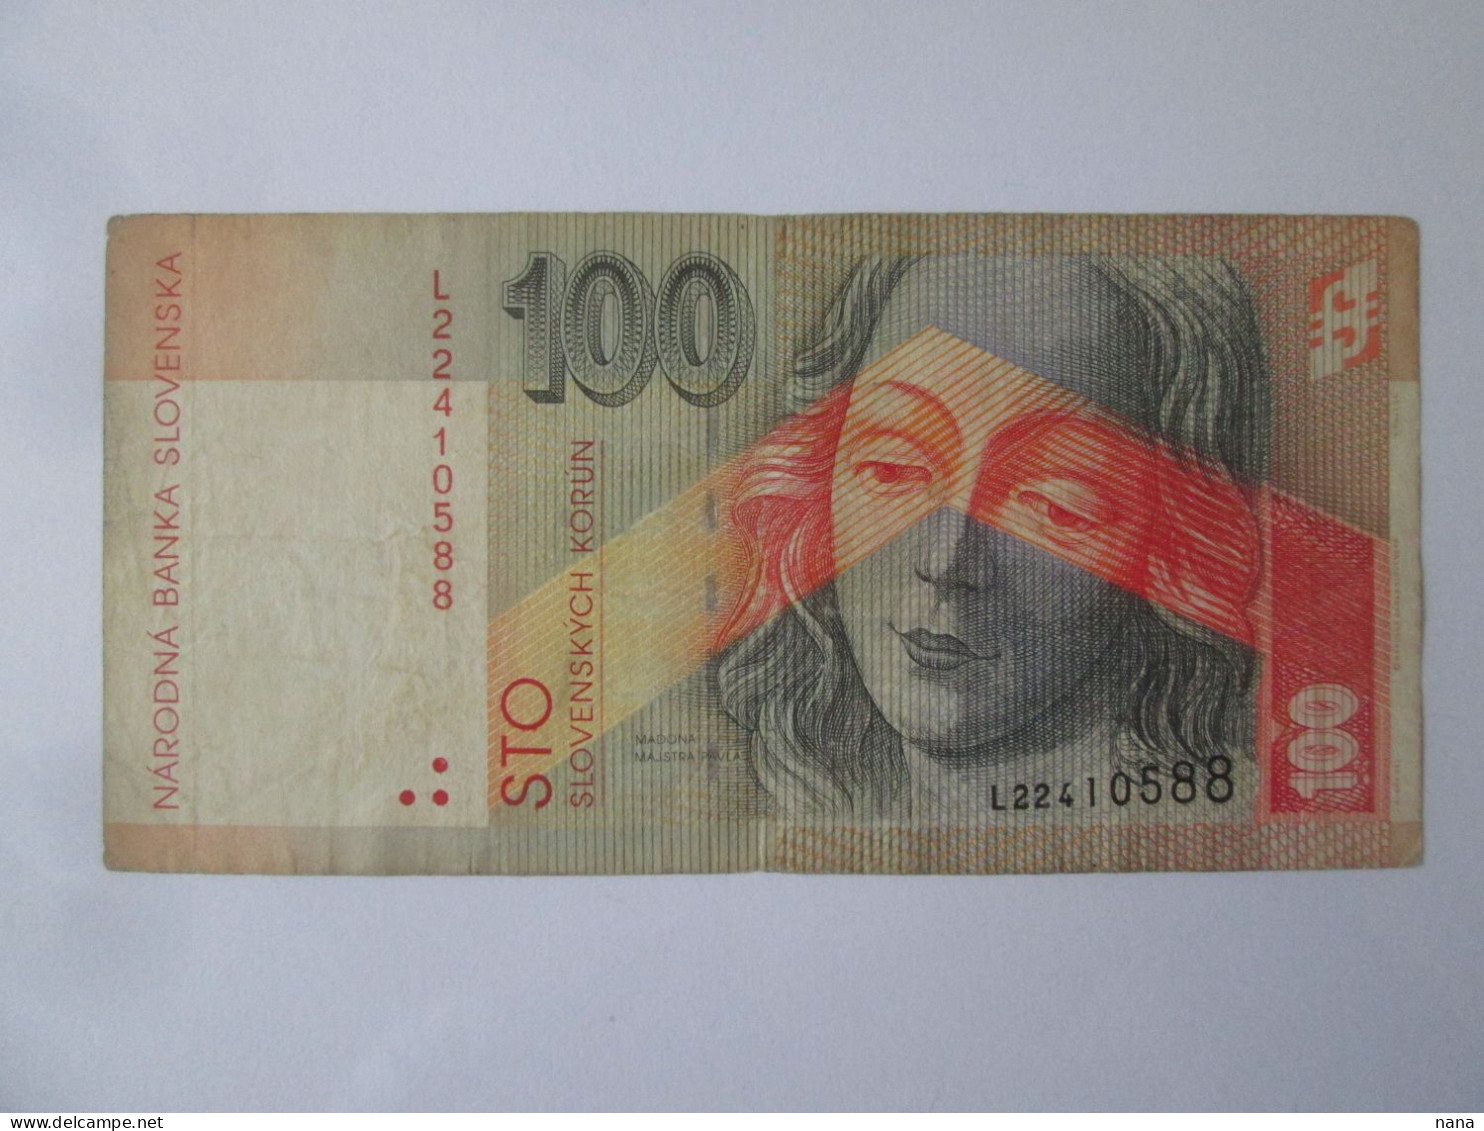 Rare Year! Slovakia 100 Korun 1997 Banknote See Pictures - Slovakia